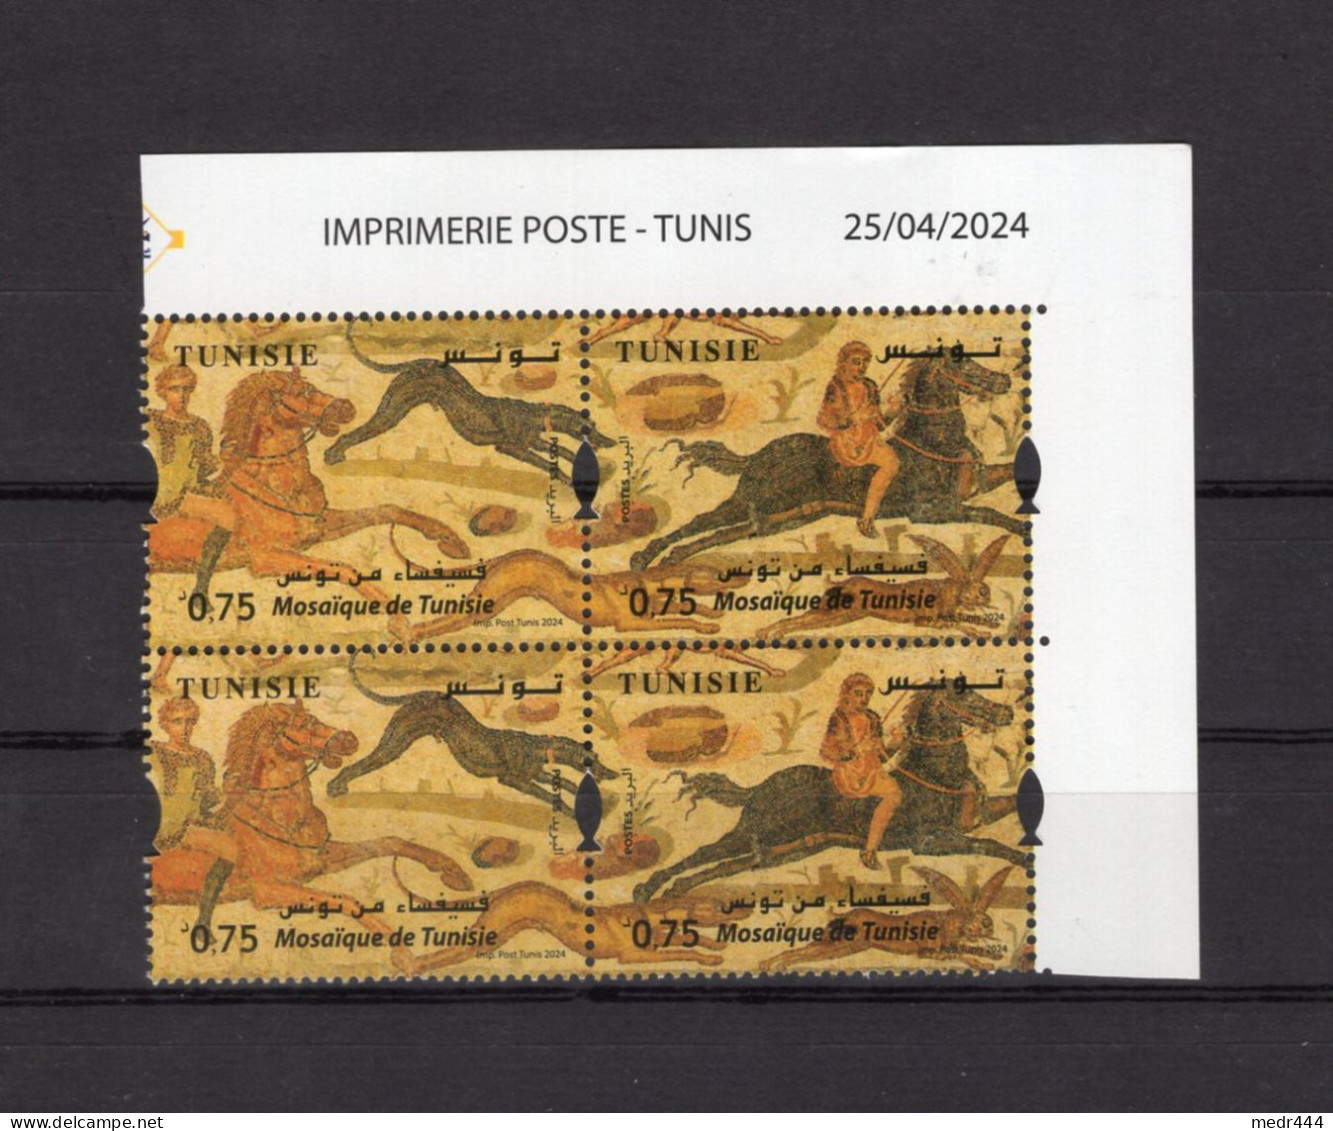 Tunisia/Tunisie 2024 - Mosaics From Tunisia/Mosaïque De Tunisie - Hunting Scene - 2 Strips Of 2 Stamps  - Superb*** - Tunisia